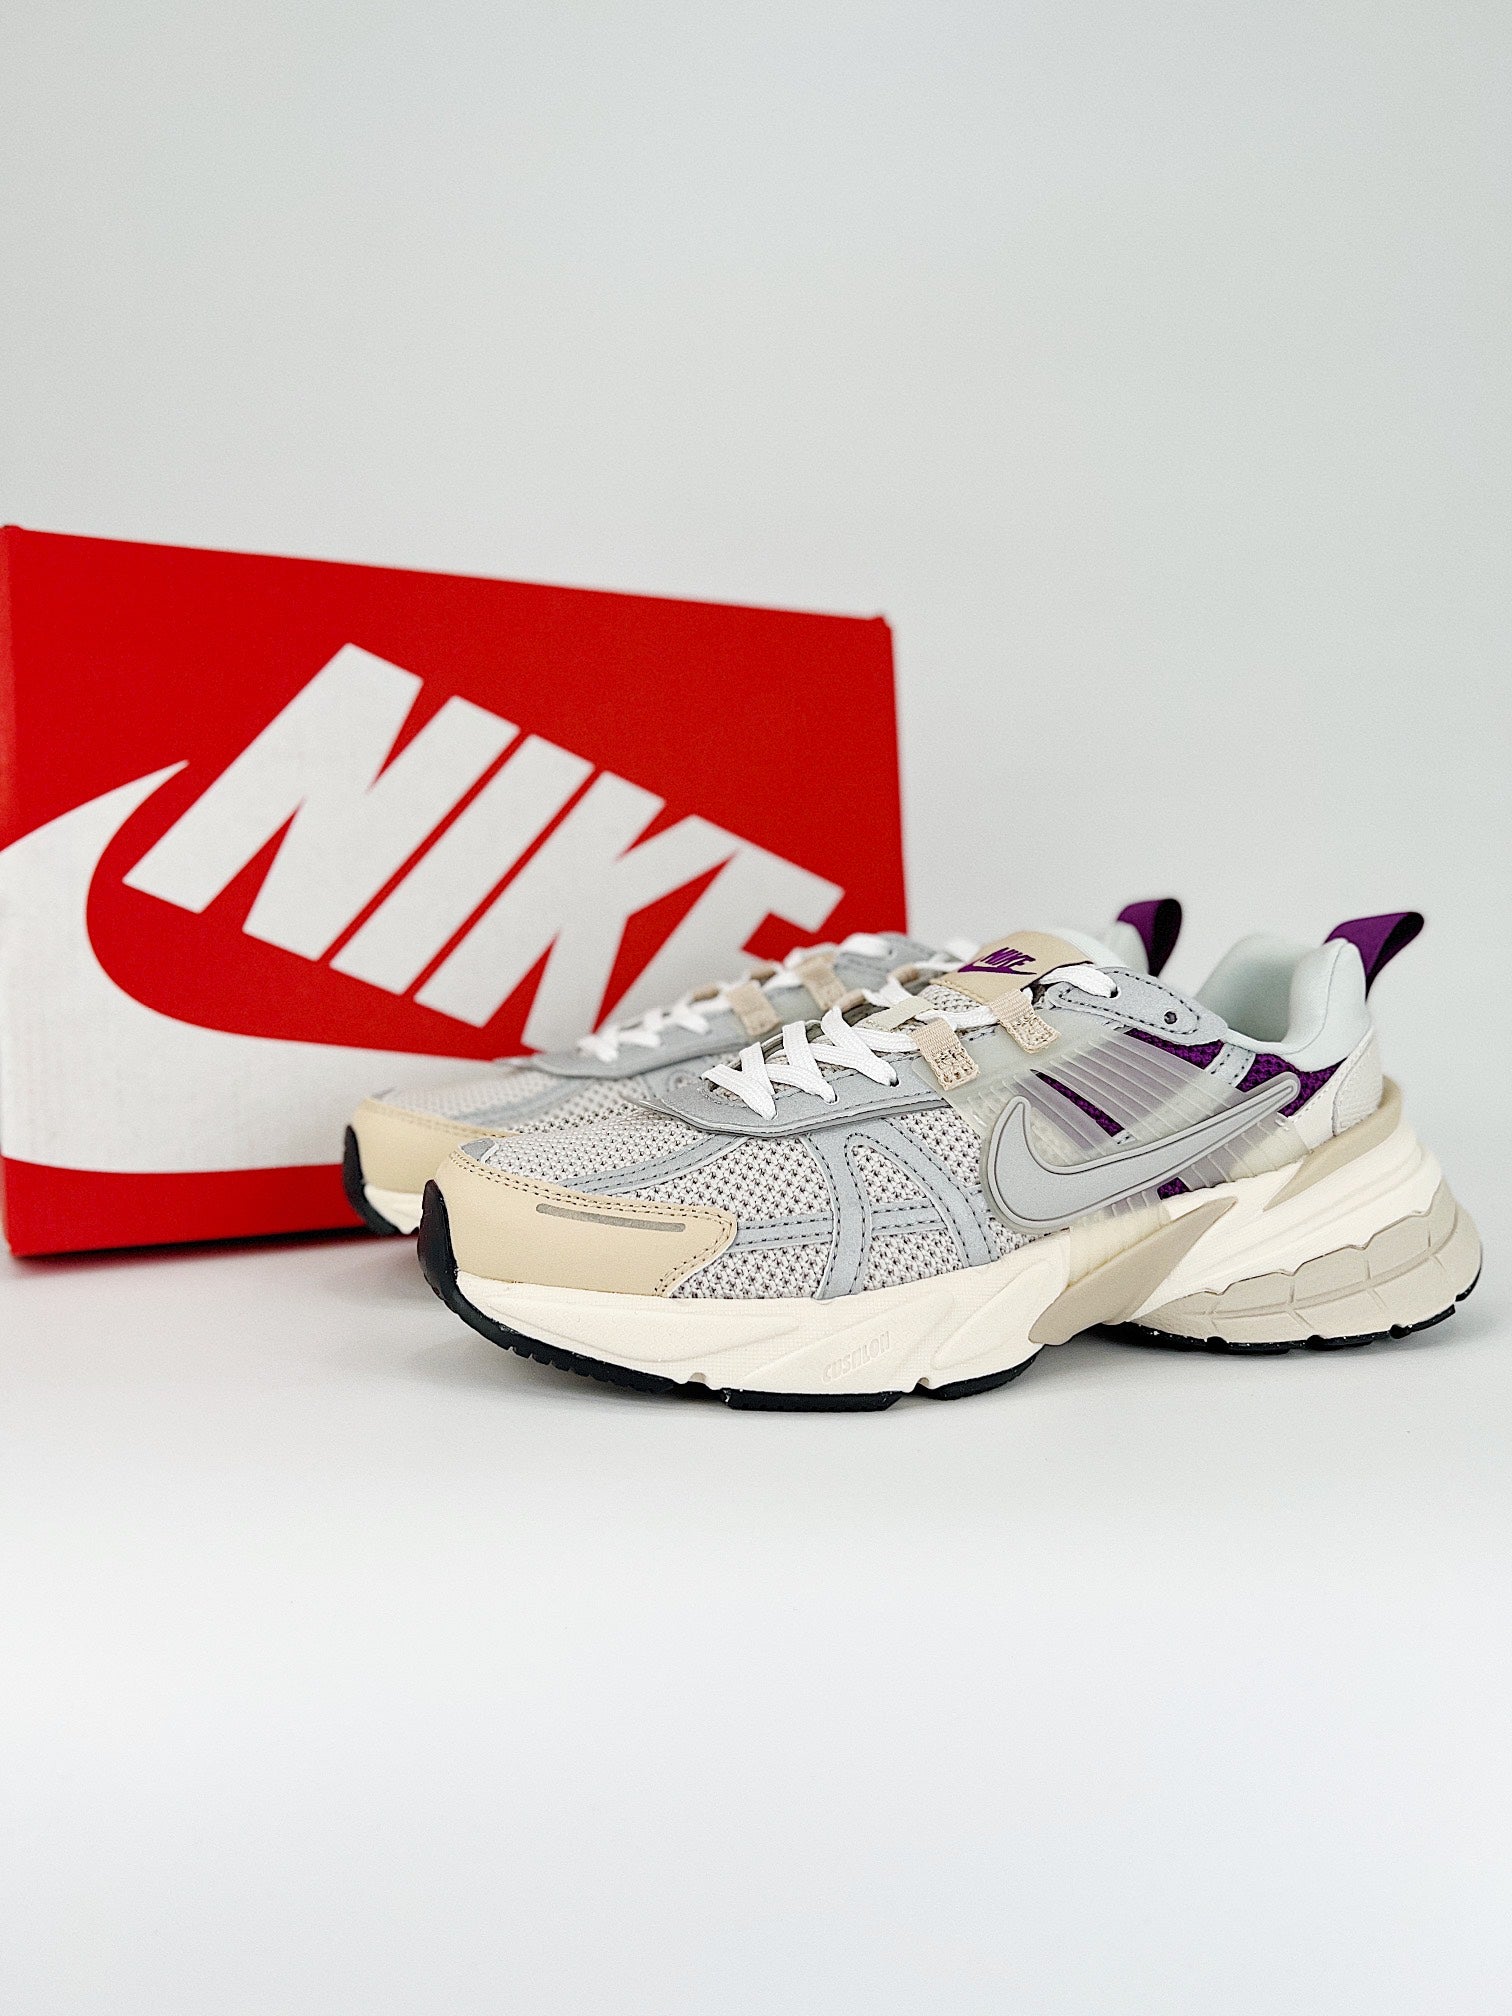 Nike V2k run light grey